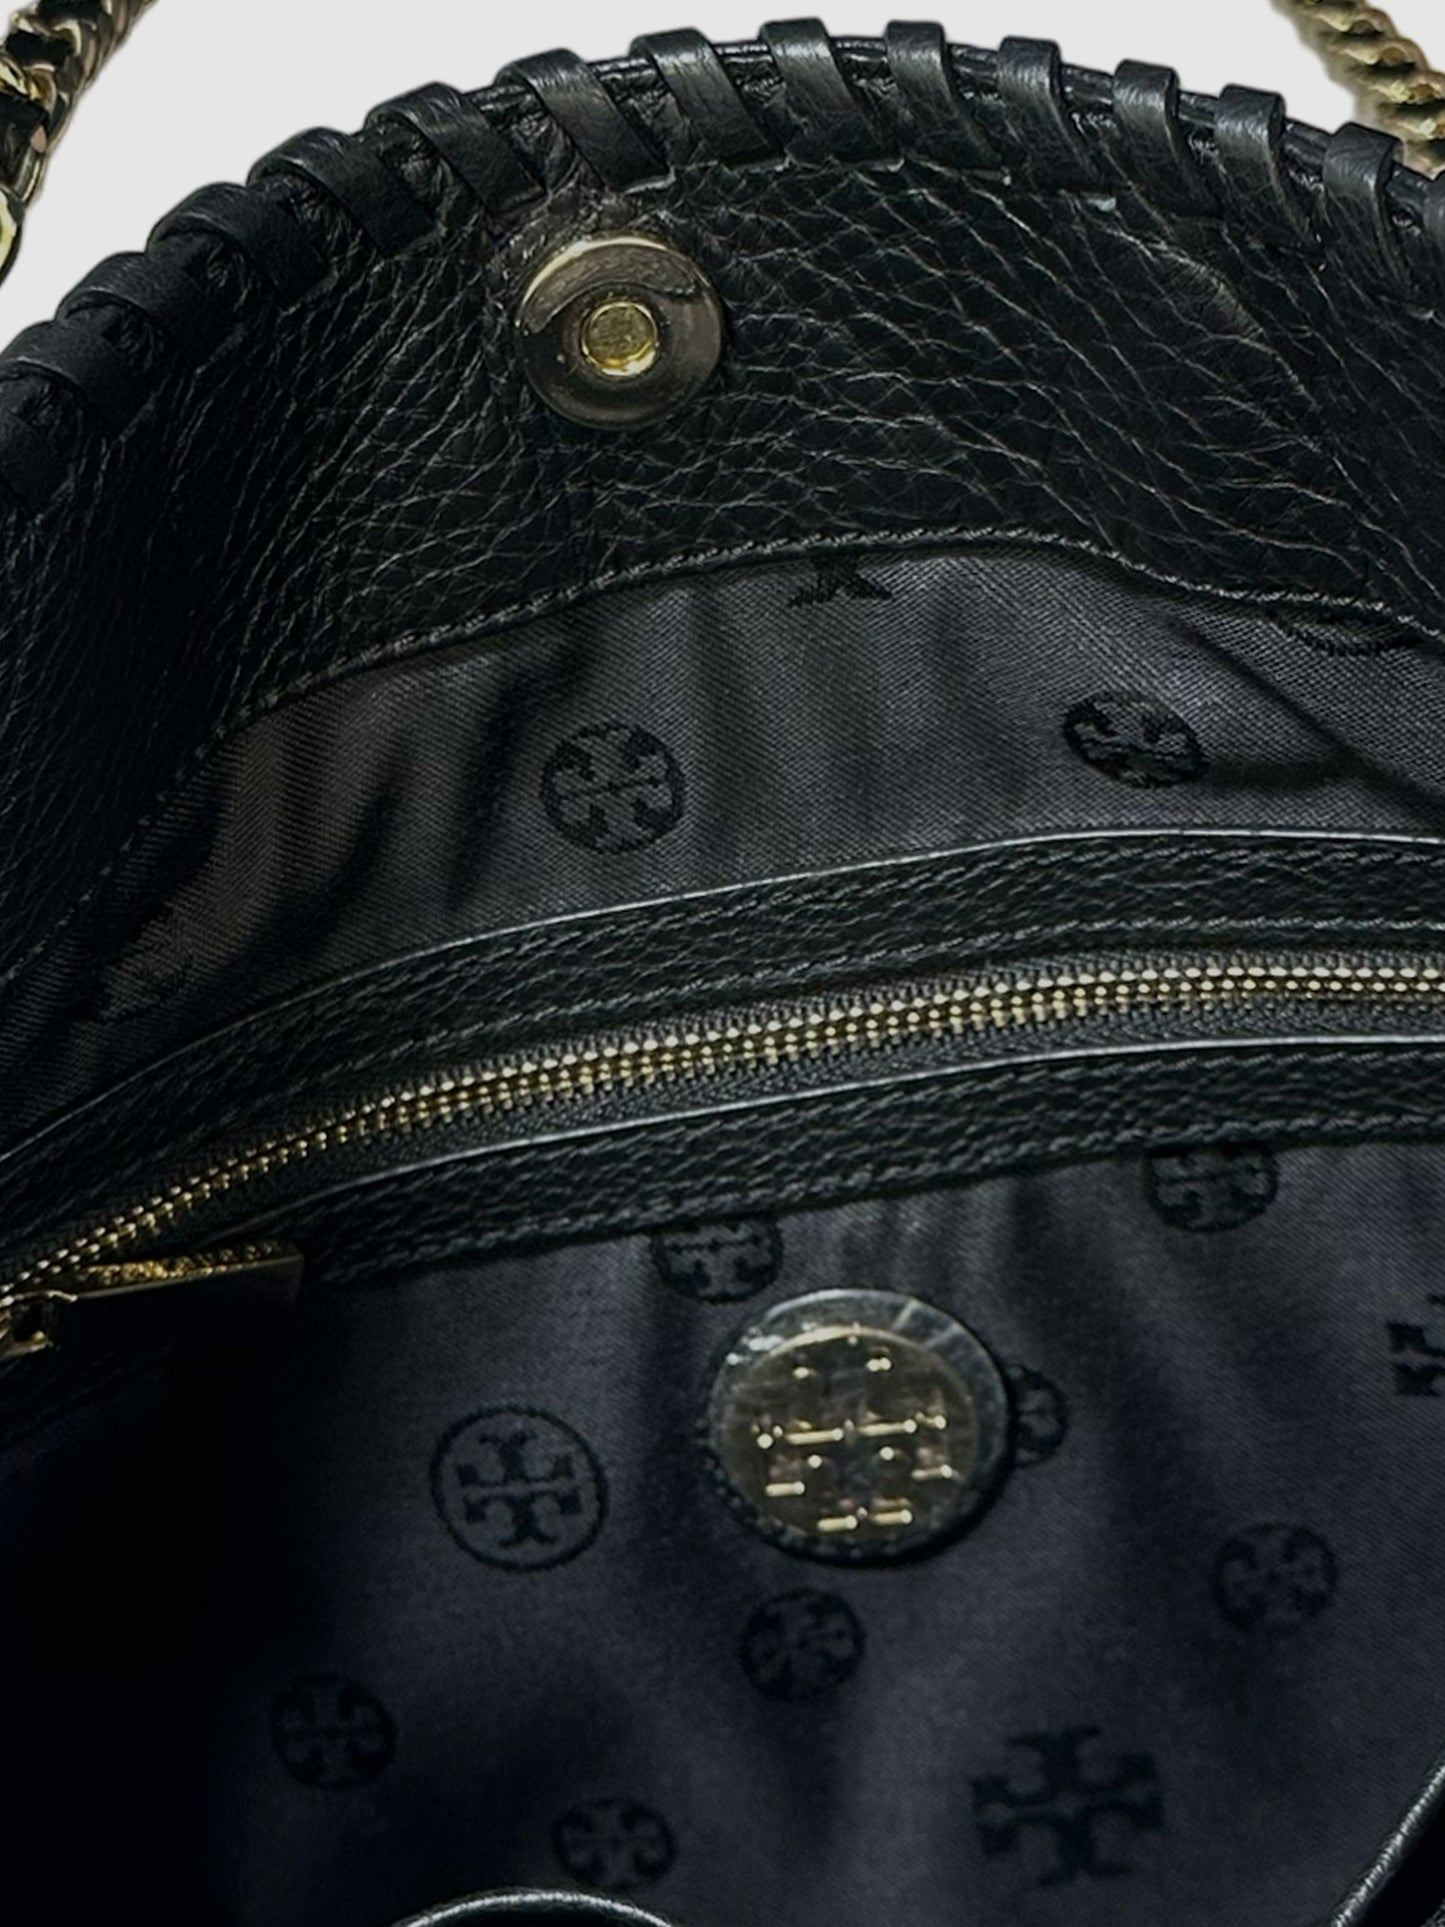 Tory Burch Leather Shoulder Bag